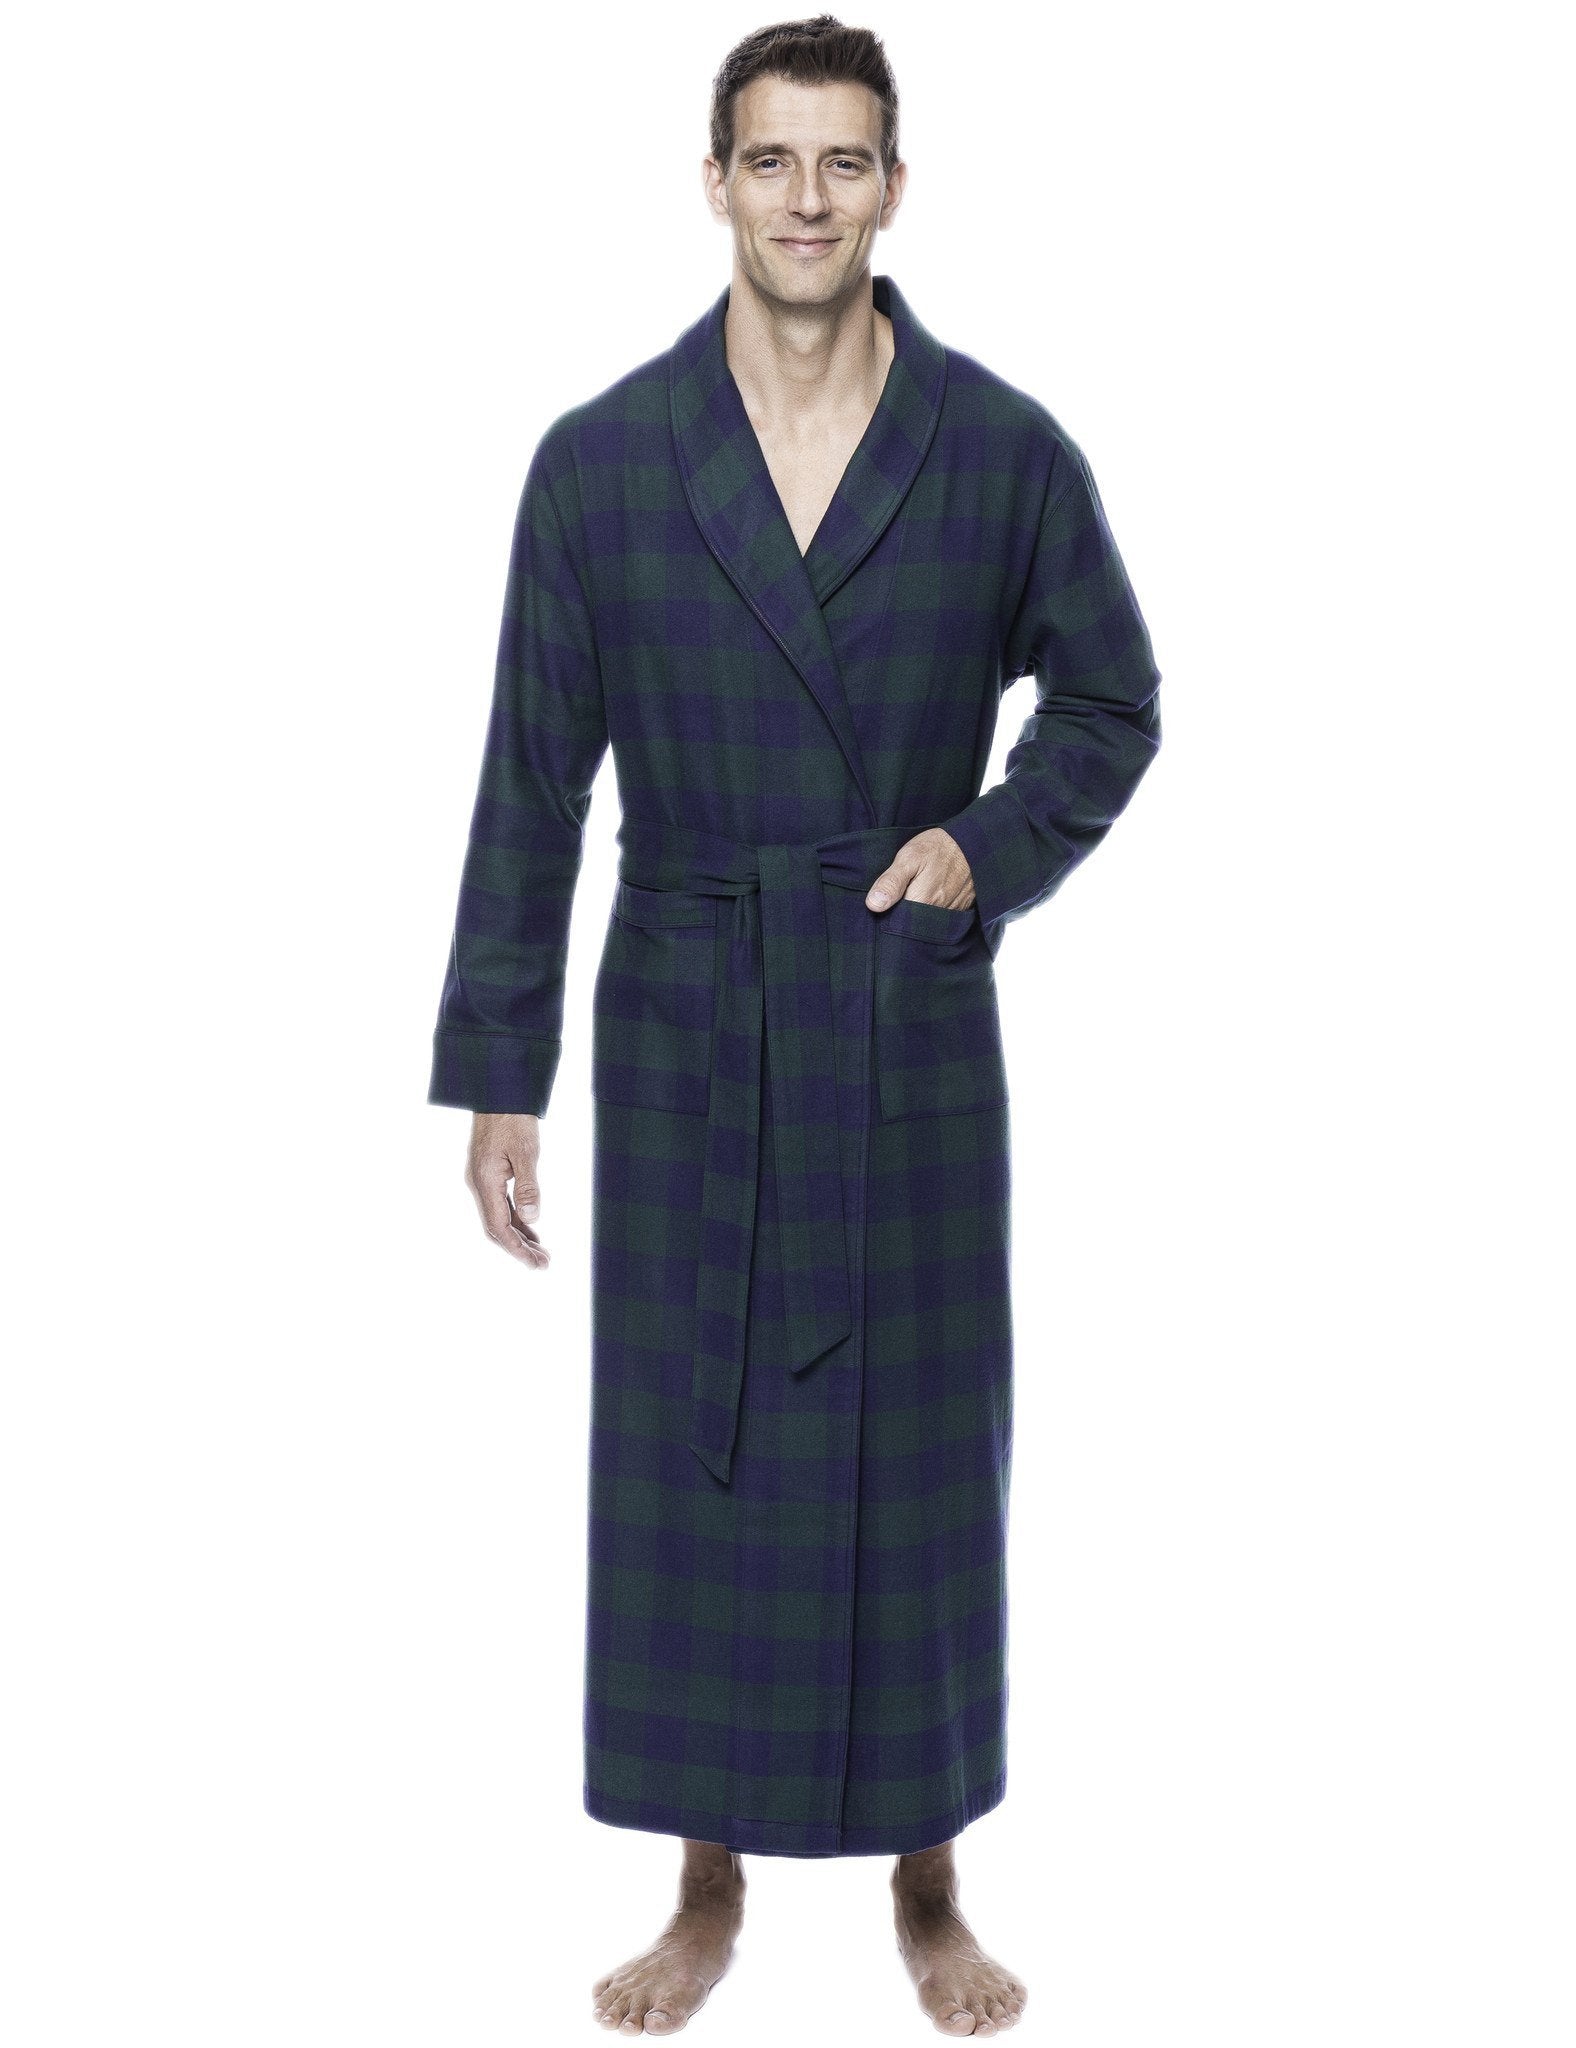 Box Packaged Men's Premium 100% Cotton Flannel Long Robe - Gingham Green/Navy